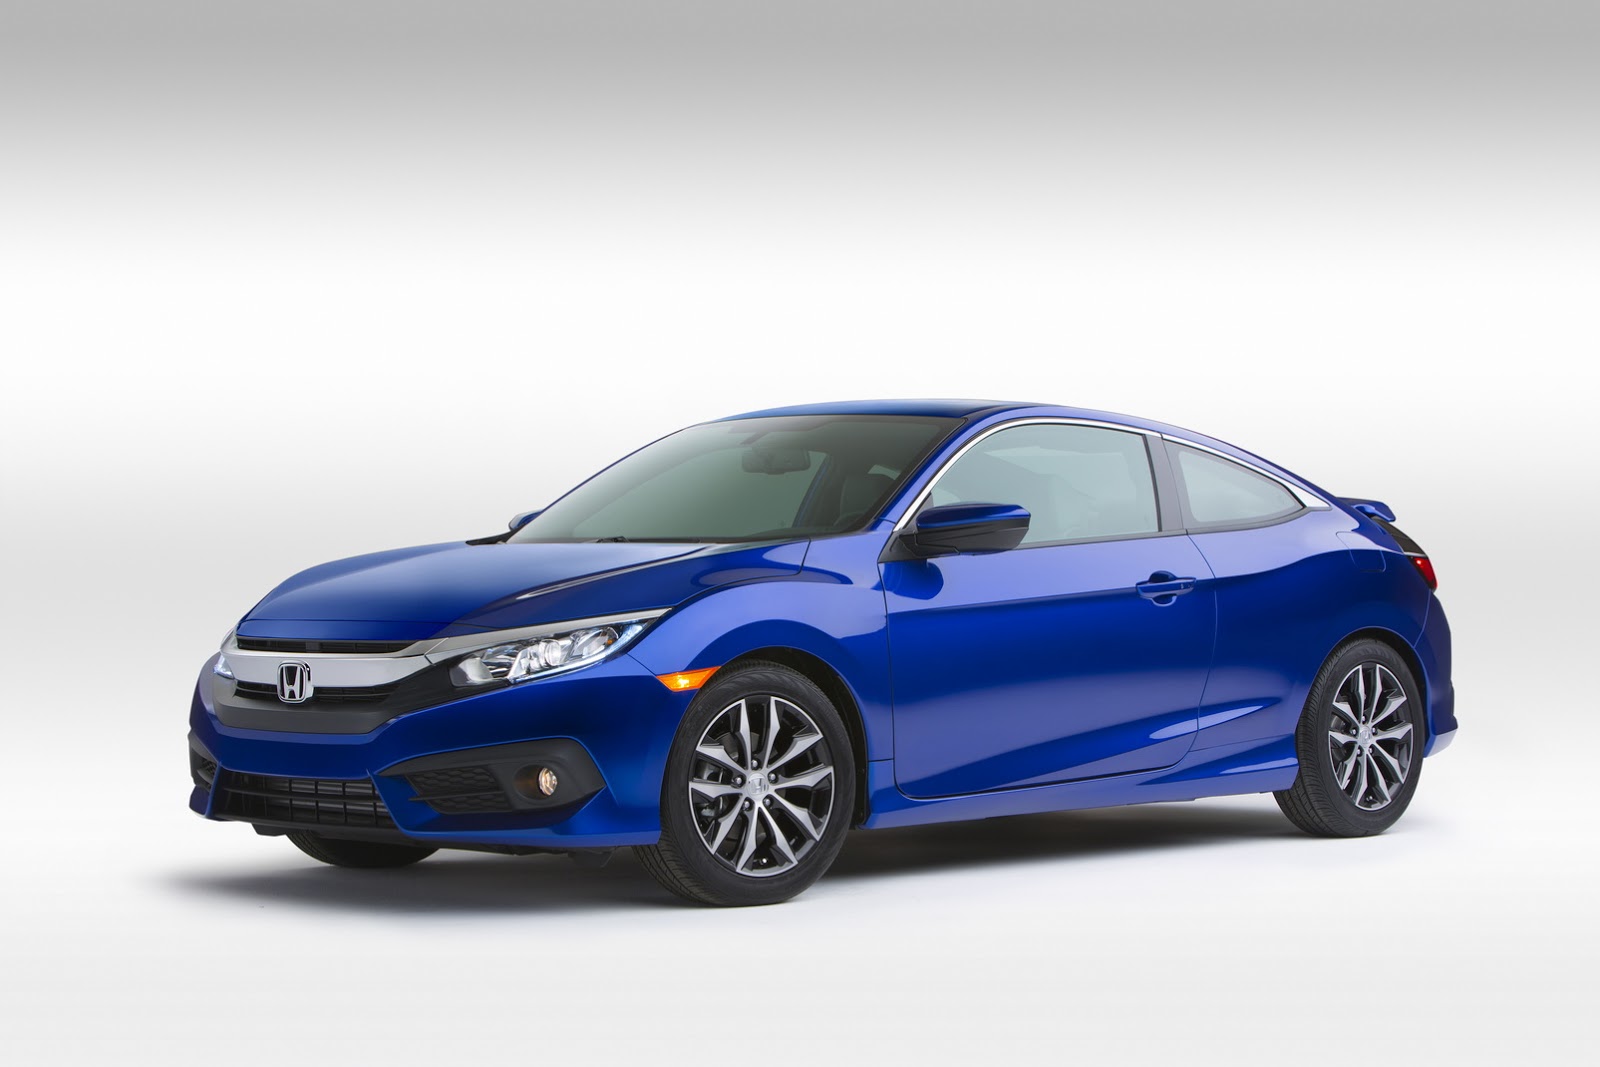 New 2016 Honda Civic Coupe Revealed Ahead Of LA Auto Show ...